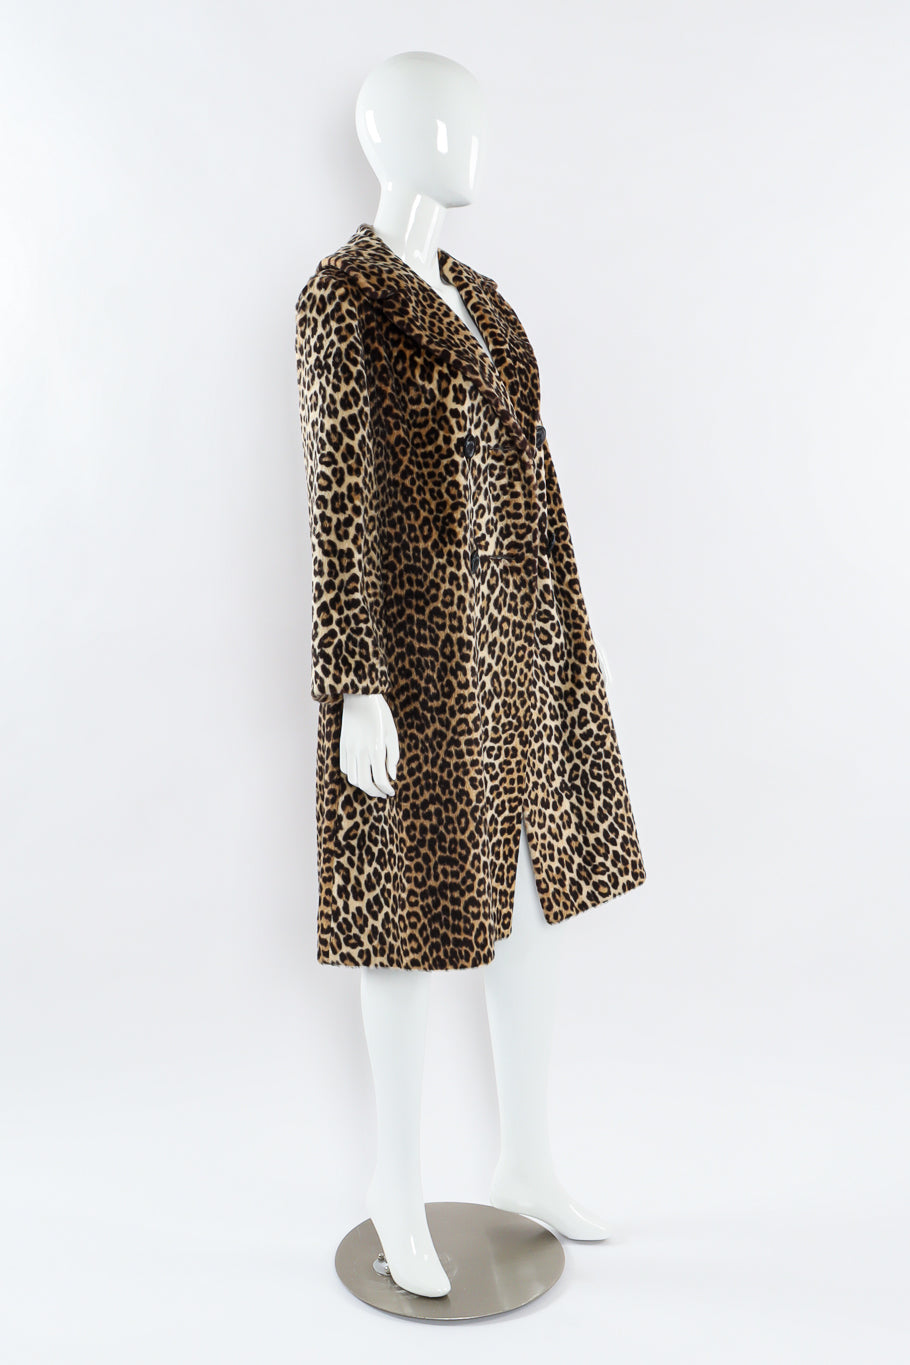 Vintage Carol Brent Double Breasted Leopard Faux Fur Coat mannequin side angle @ Recess LA